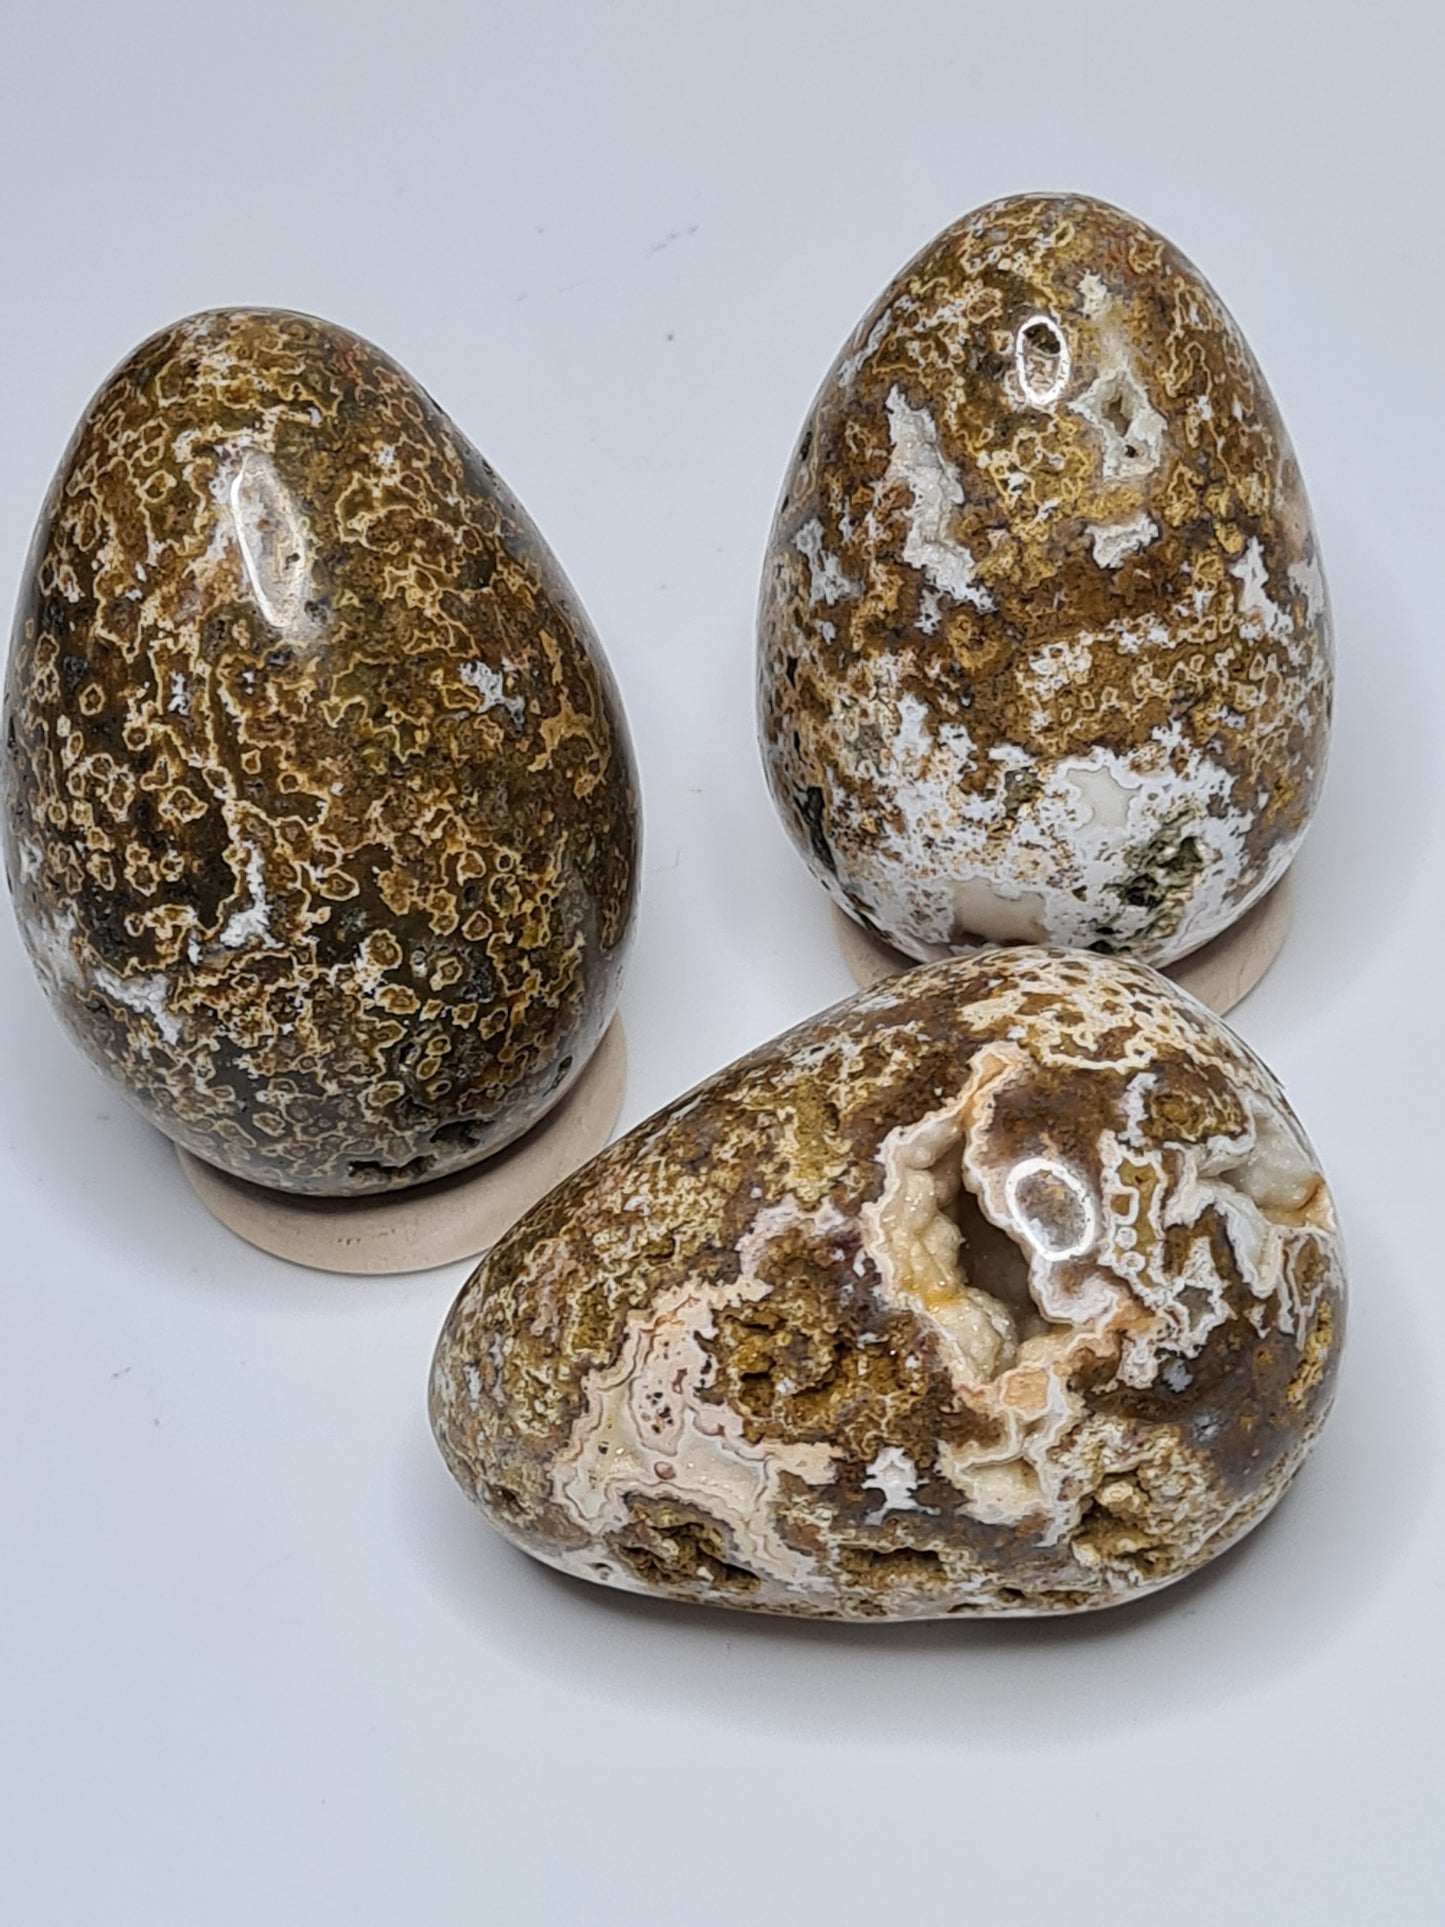 Three earth toned orbicular jasper eggs, each with unique patterns and quartz druzy caves